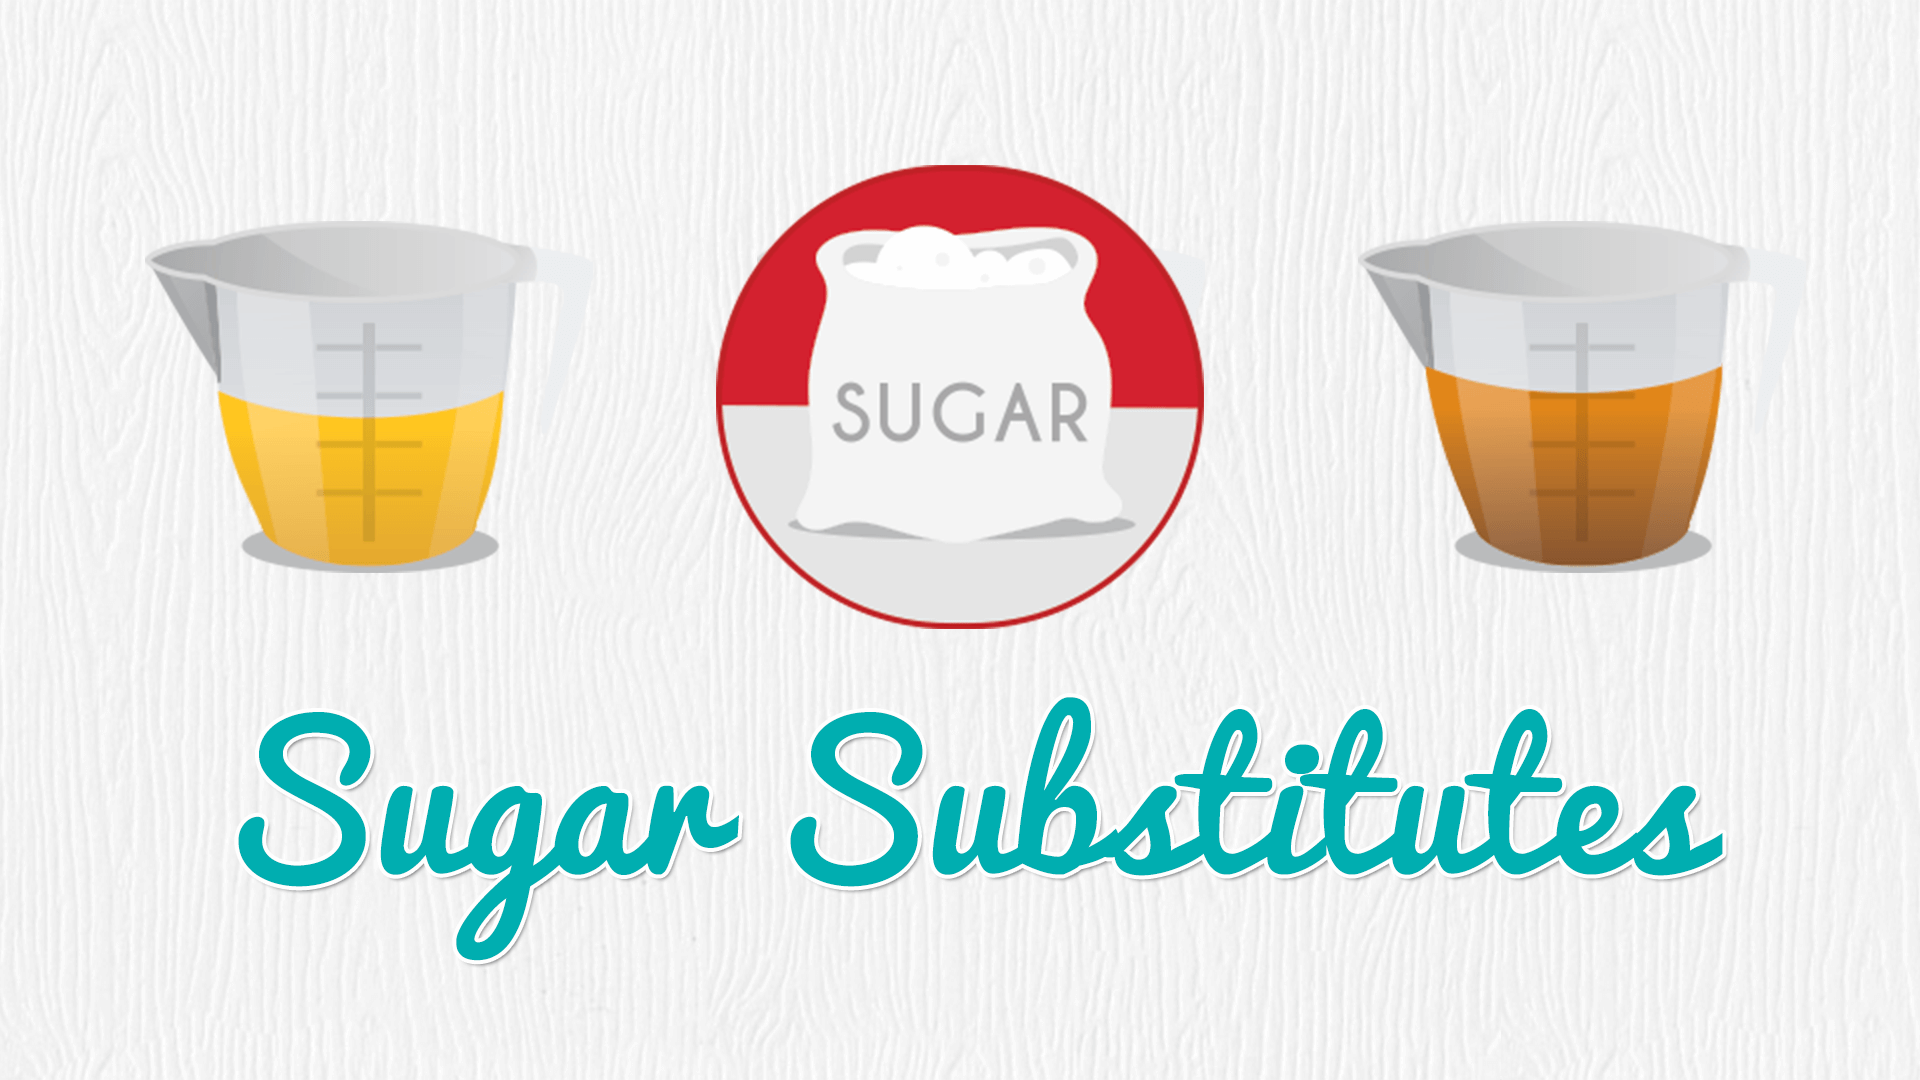 Baking Sweetener 1:1 Sugar Substitute